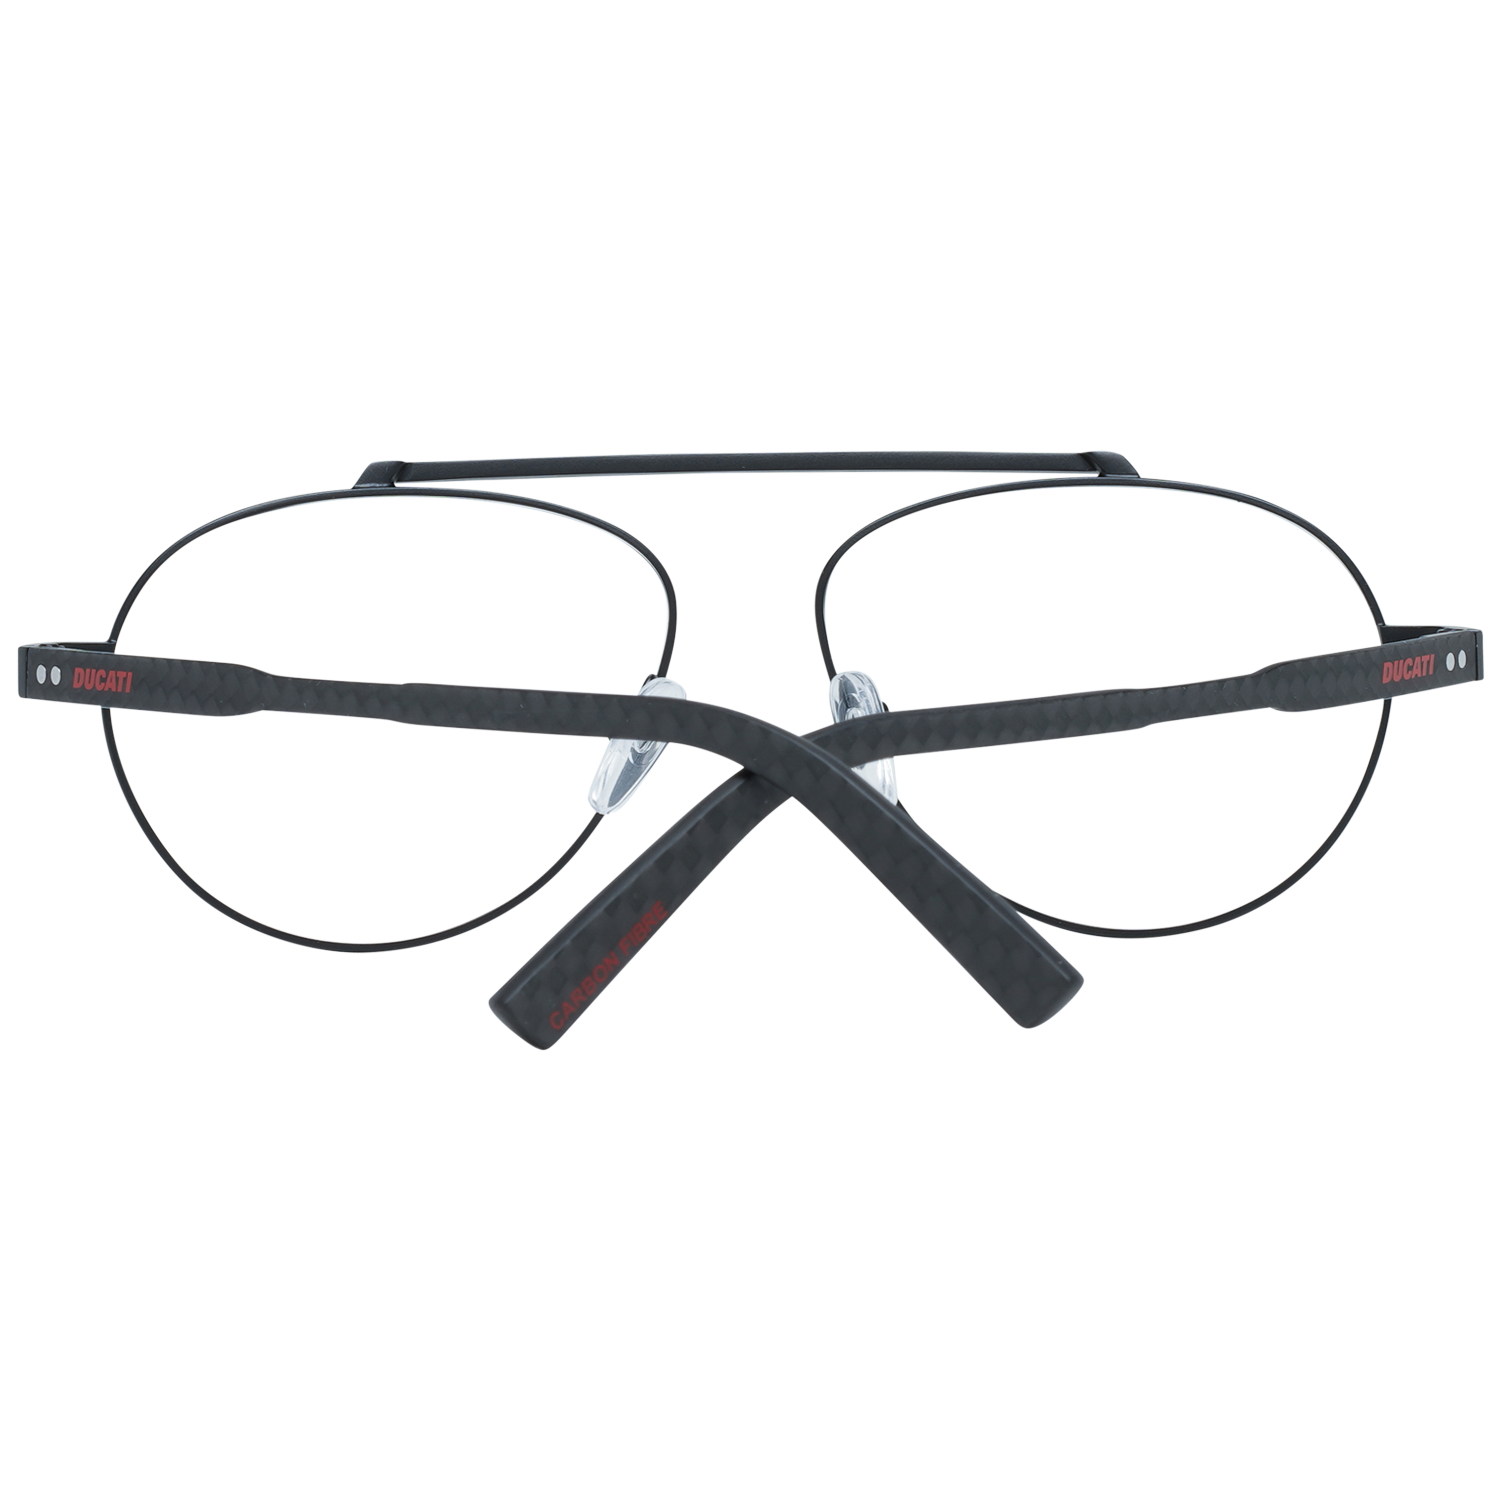 Ducati Frames Ducati Optical Frame DA3029 002 57 Eyeglasses Eyewear UK USA Australia 